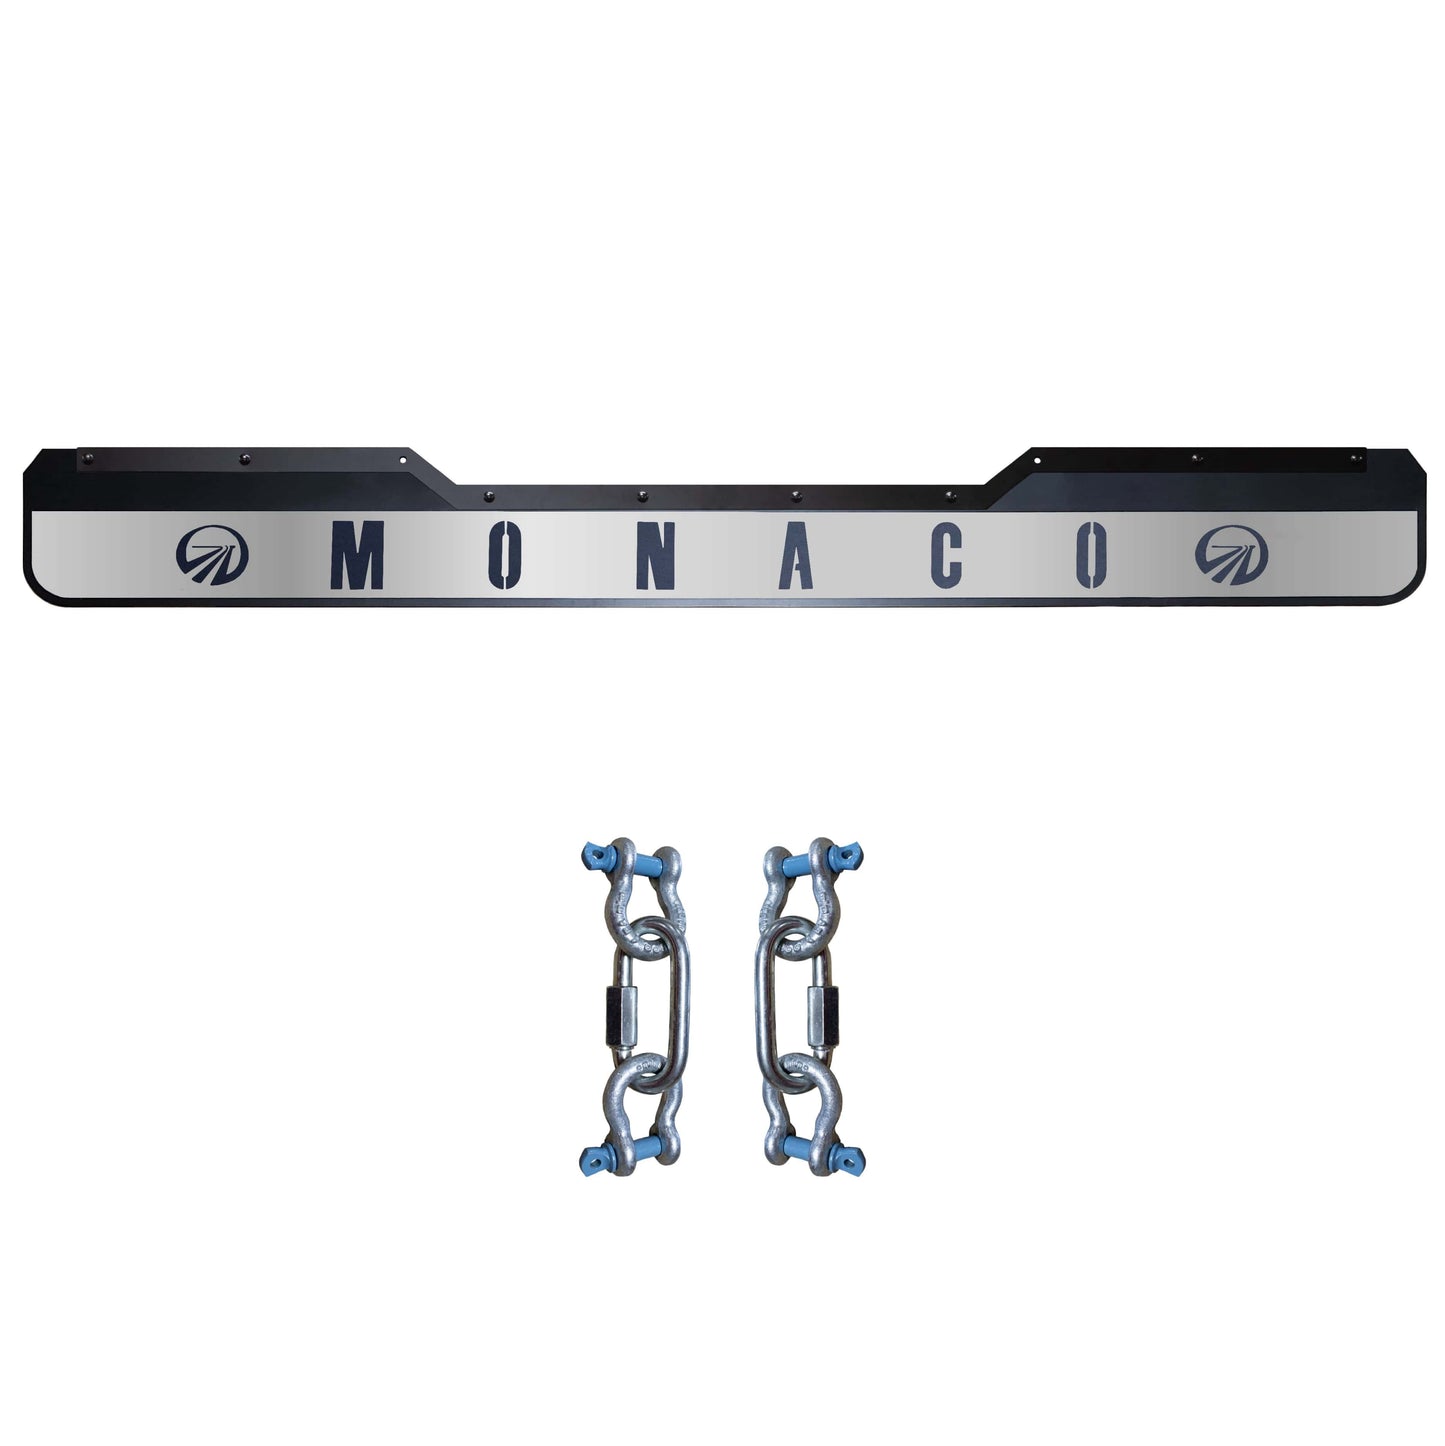 Future-Sales-Rock-Guard-MONACO-12-inch-Notched-Monaco-Rock-Guard-MFR-M-03N-12-by-95-Center-Notch-Mirror-Finish-hardware